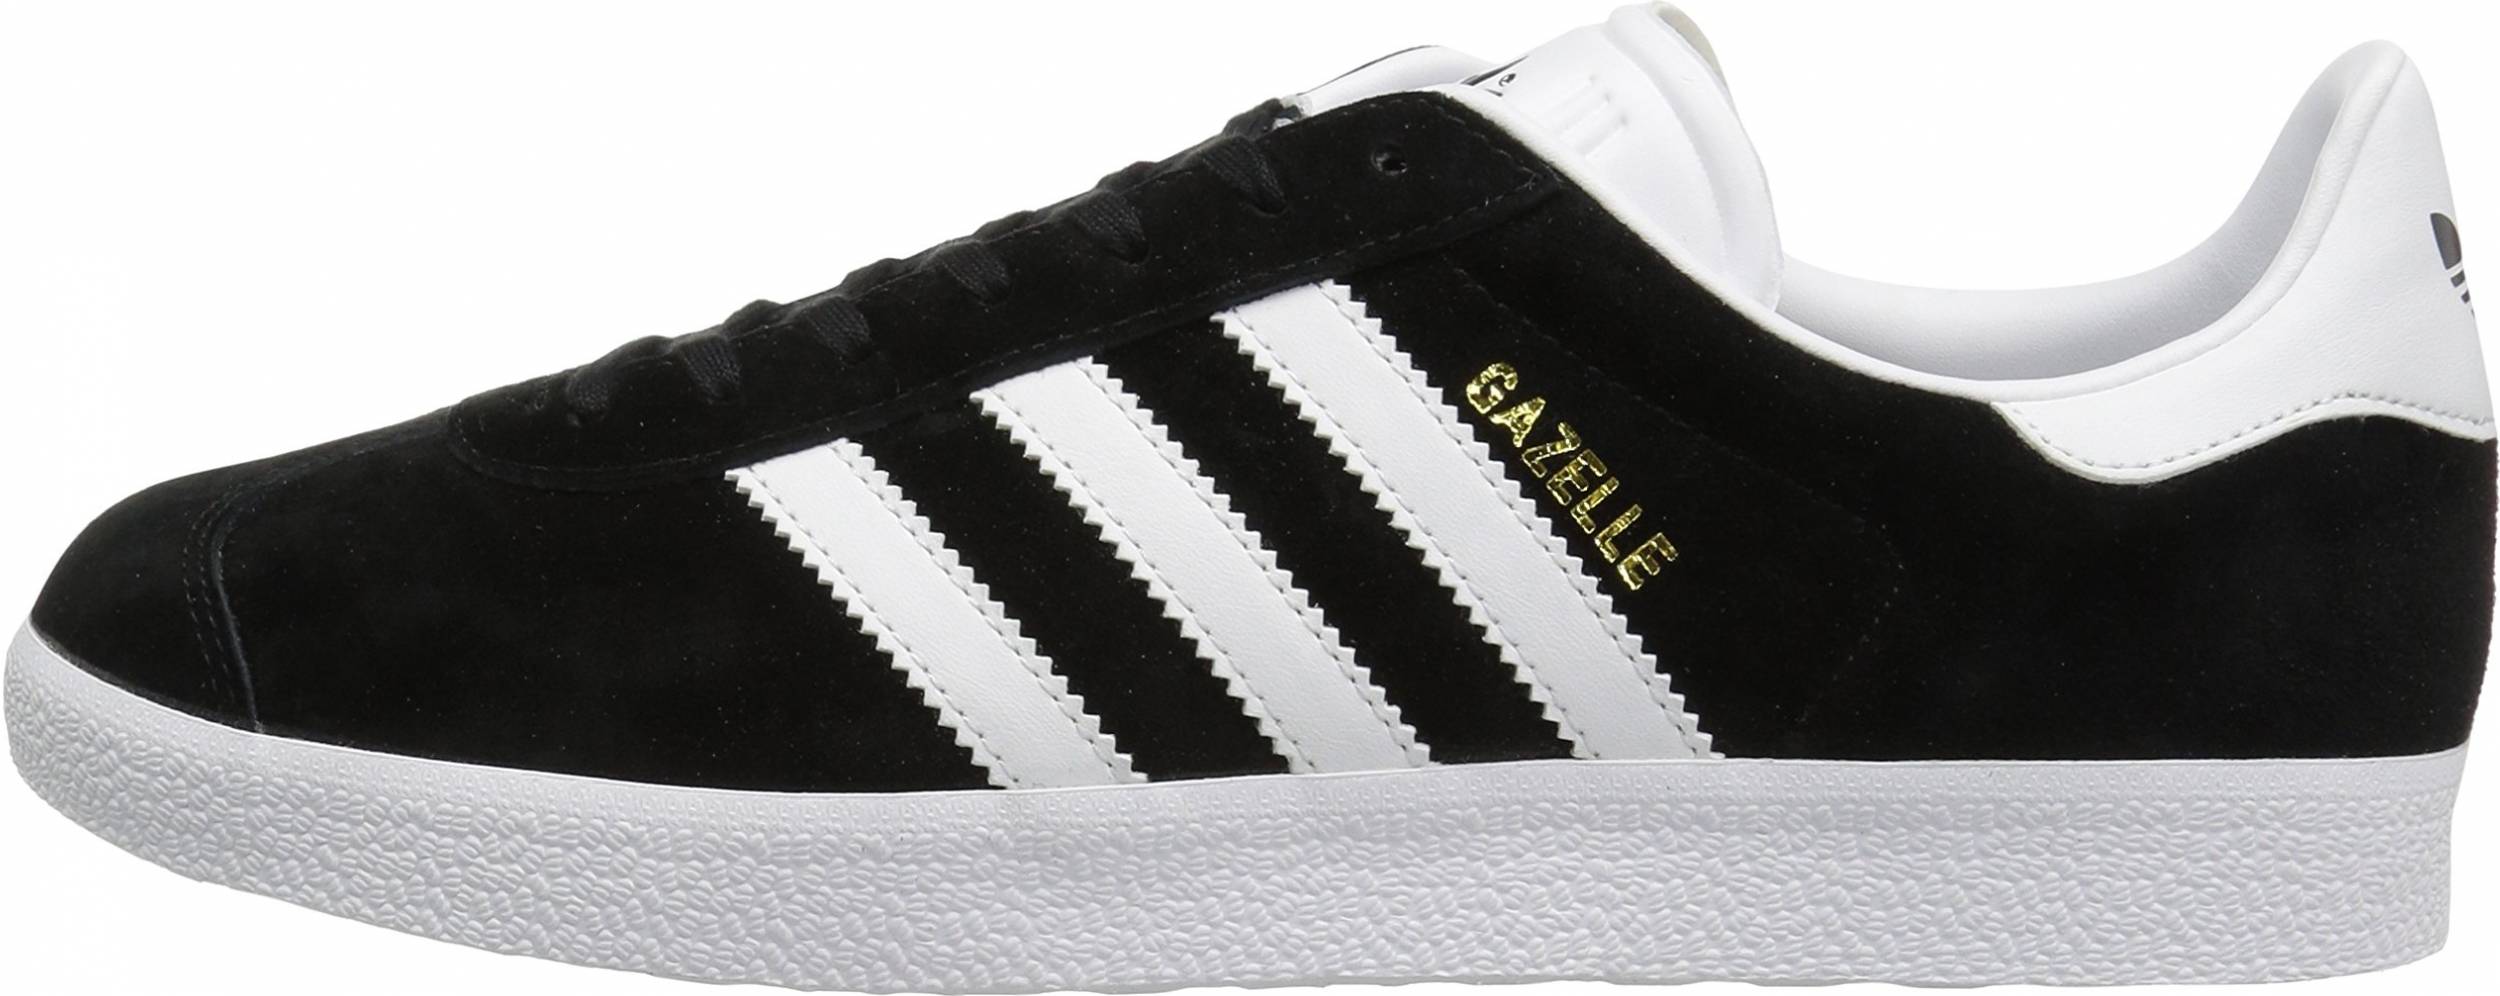 Adidas Gazelle sneakers in 50+ colors (only $39) | RunRepeat صدريه رجاليه